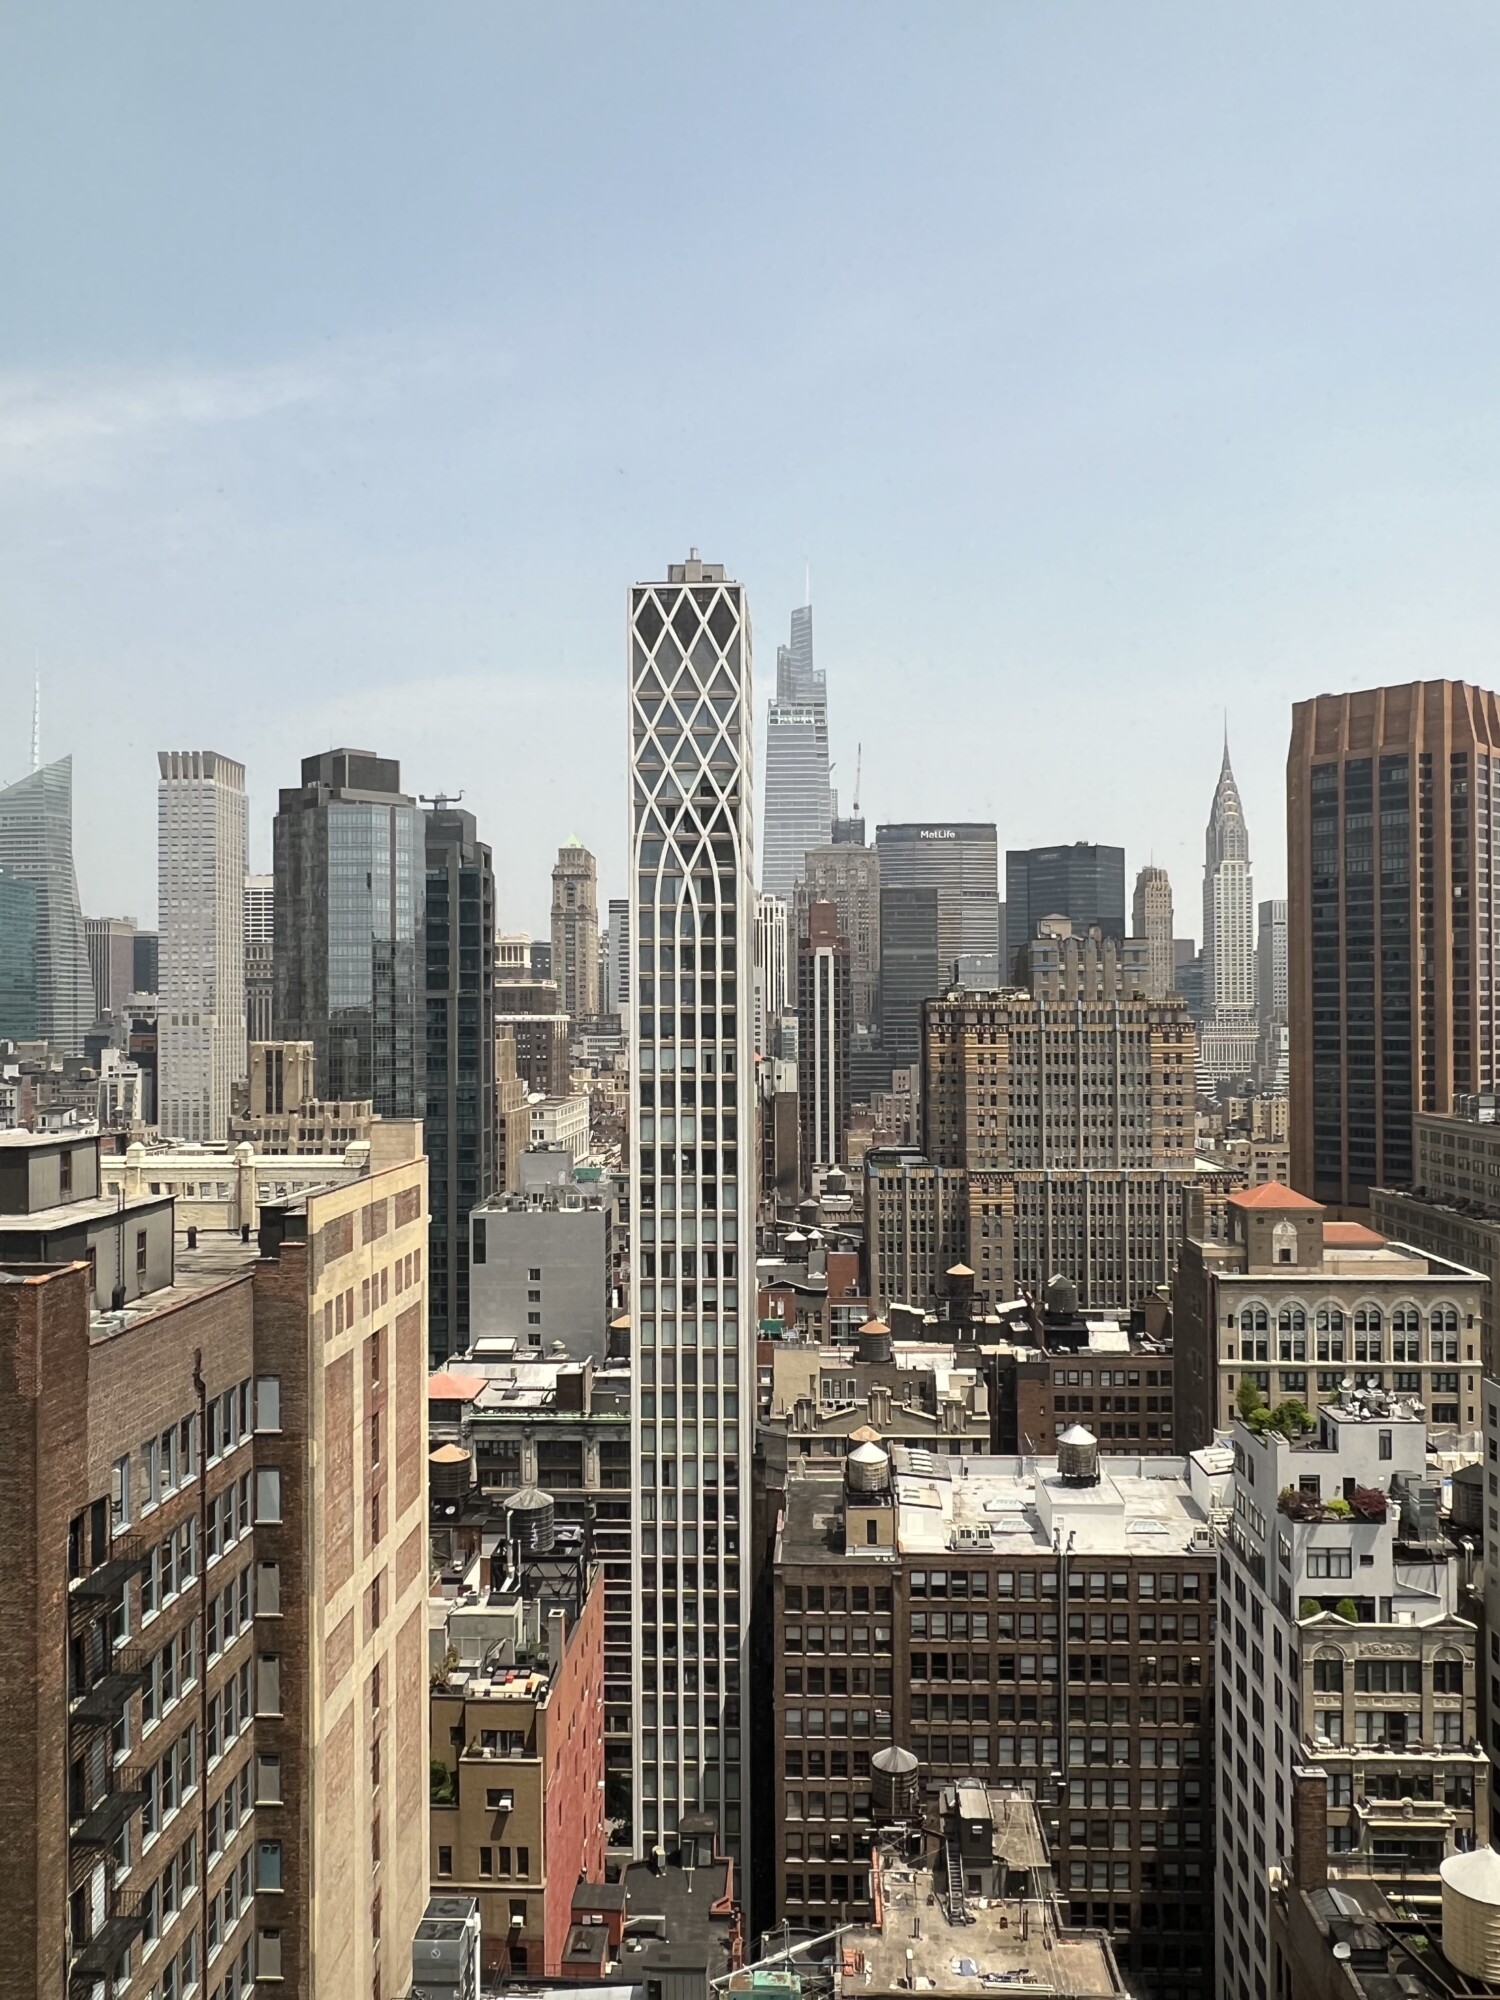 New York City Property Values